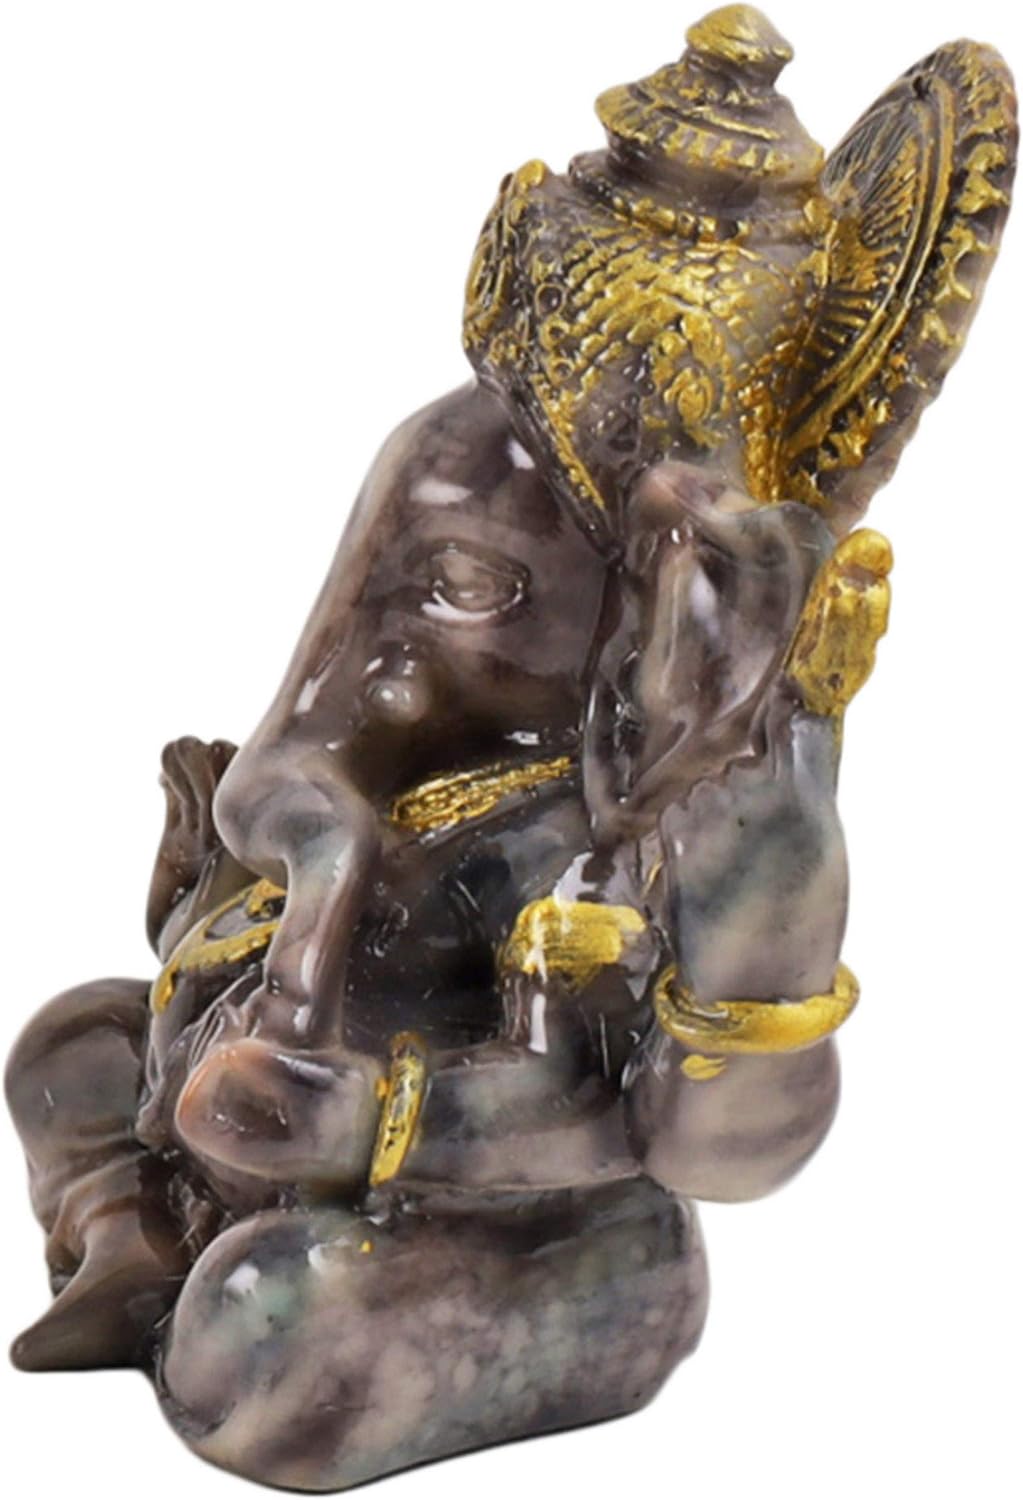 TIED RIBBONS Ganesha Statue for Car Dashboard | Hindu Elephant God Statue | Lying Ganesha Idol for Pooja, Home Decor | Ganesh Buddha Figurine | Ganesh Chaturthi Decor | Ganesh Chaturthi Gifts